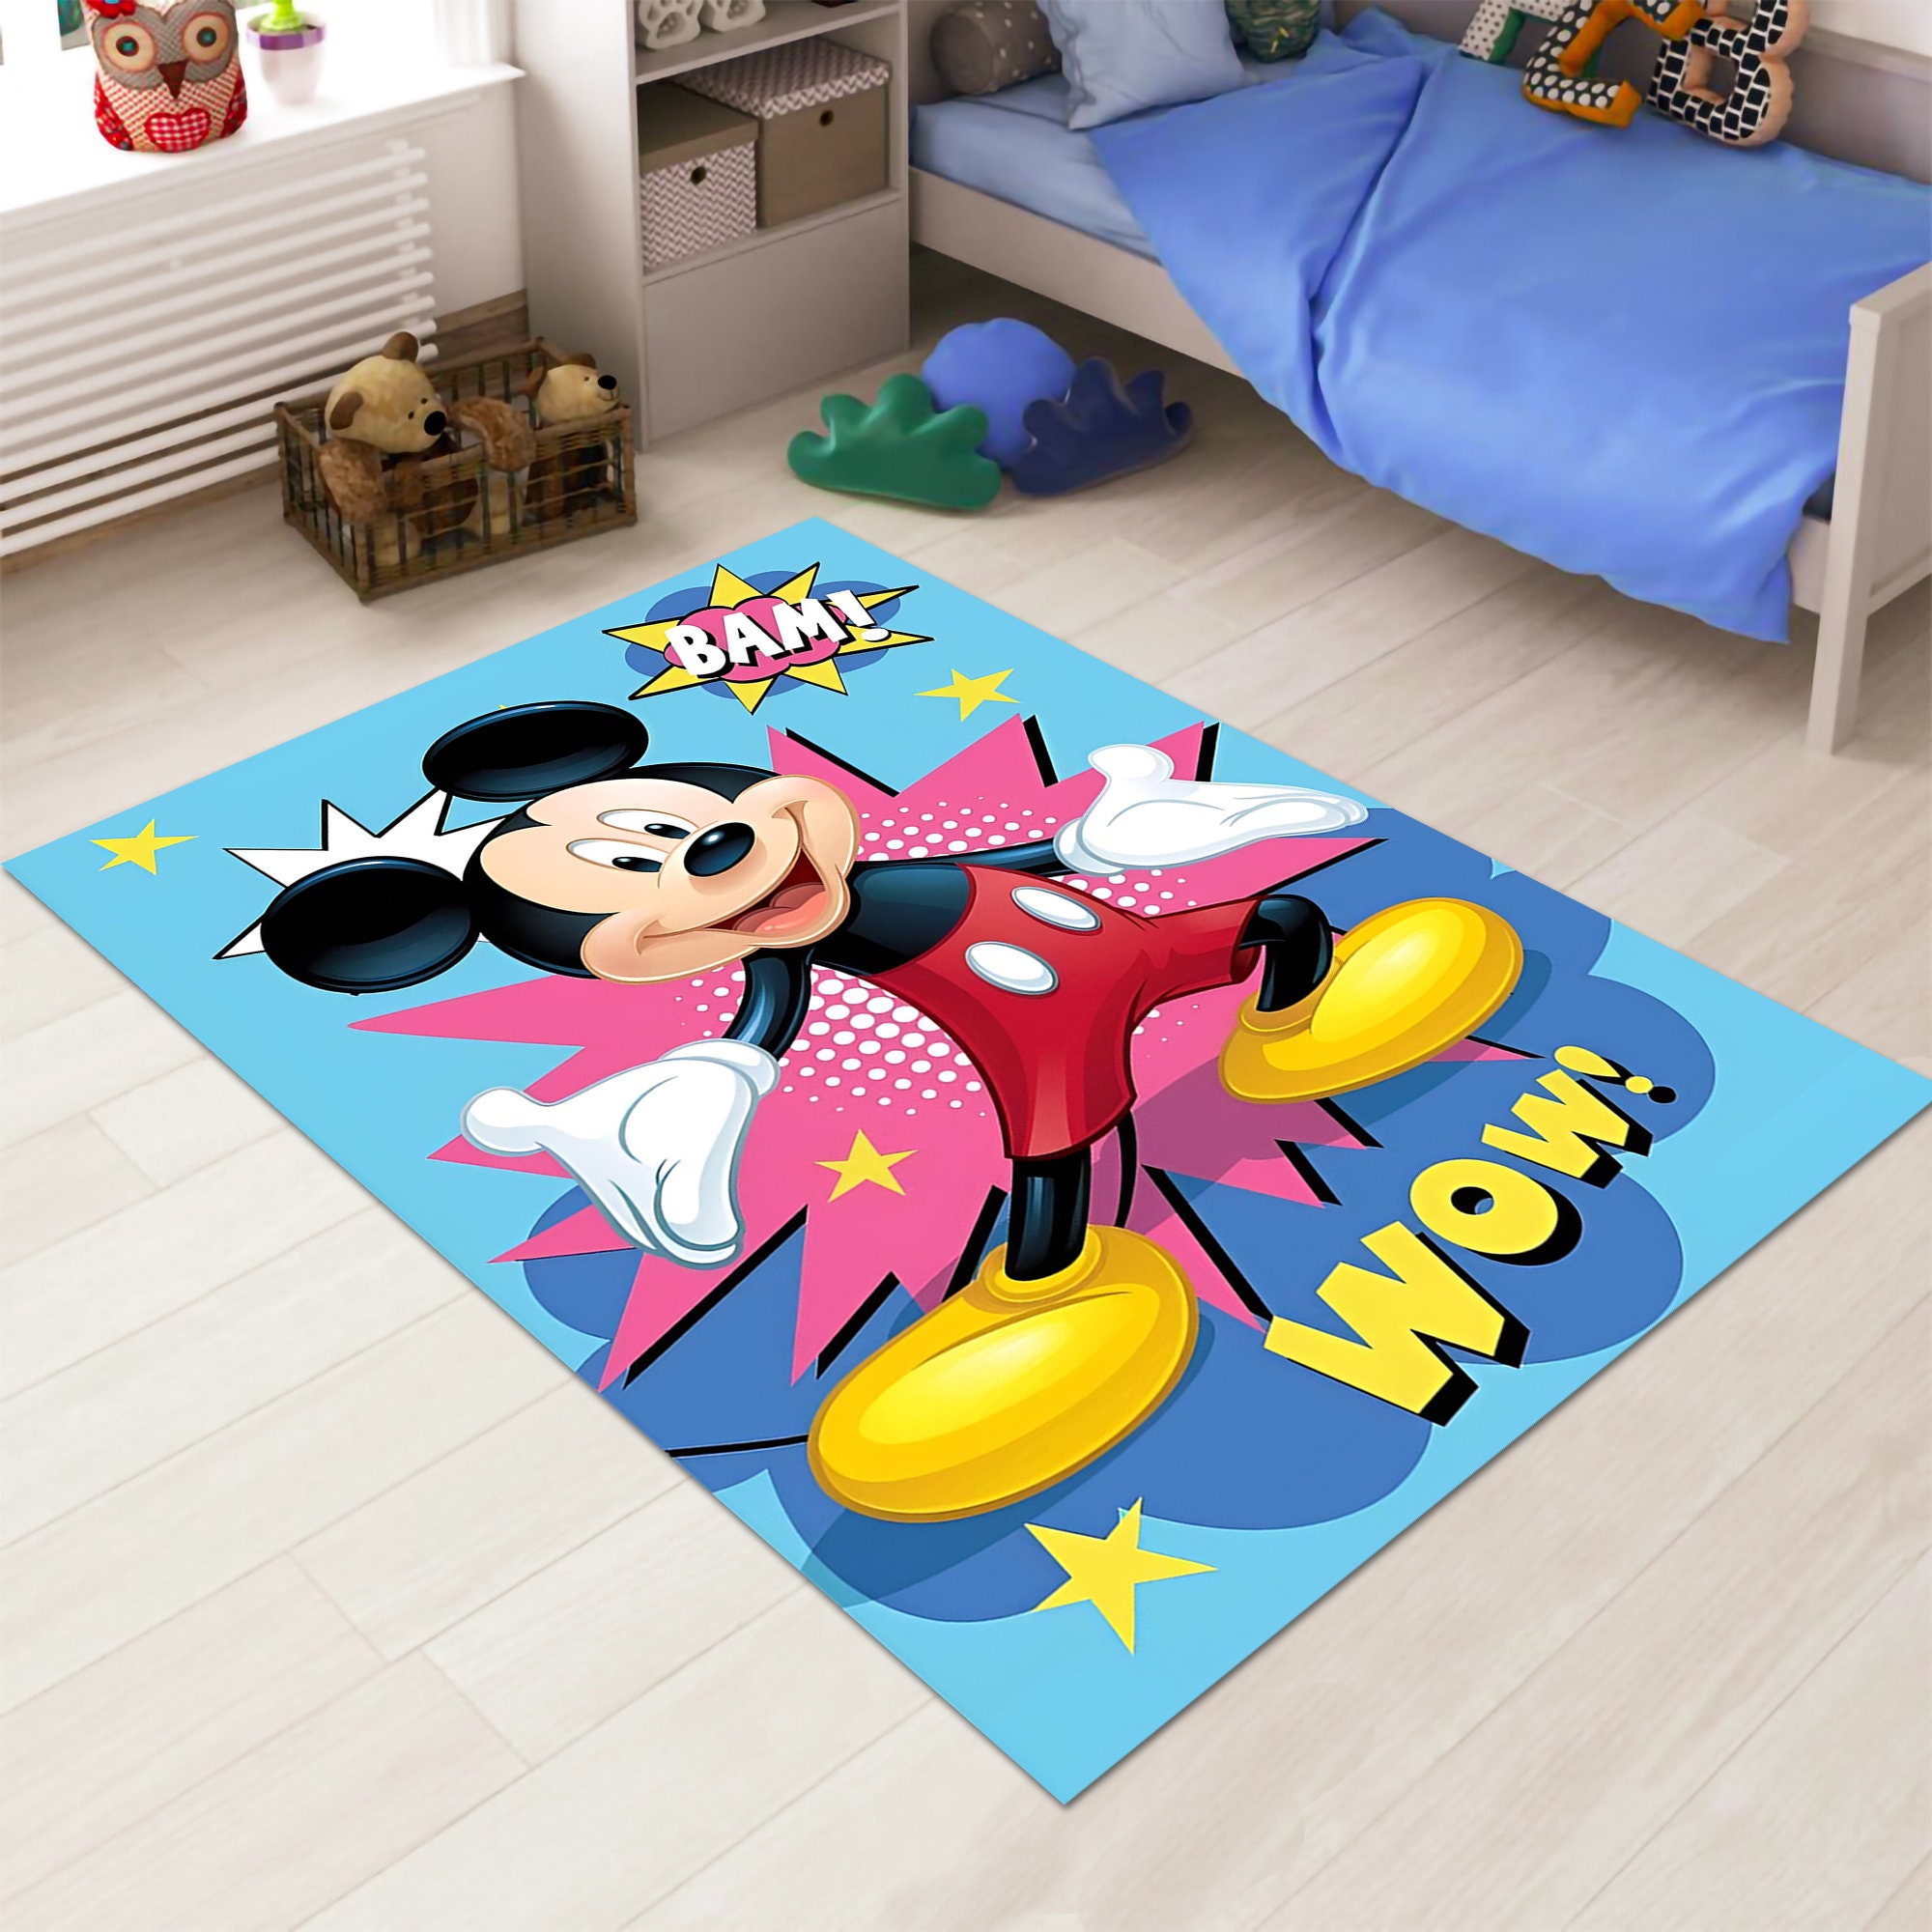 Discover Minnie Rug, Mouse Rug, Cartoon Rug, Gift for Daughter, Colorful Rug, Kids Room Rug, Nursery Decor,Kids Decor,Cute Rug